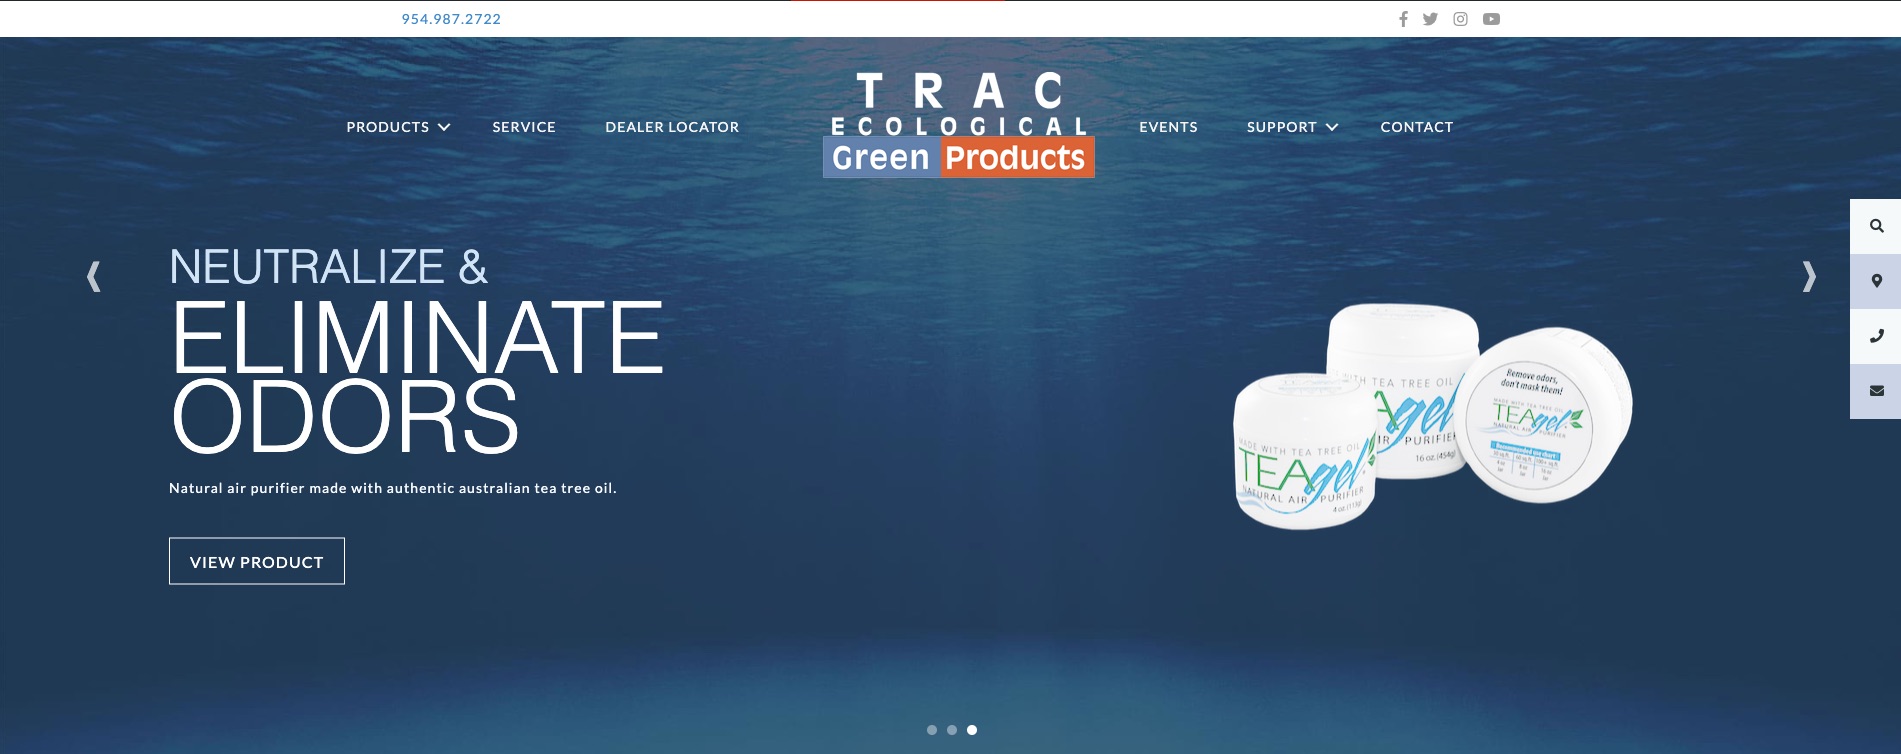 trac-online - iGreen Marketing